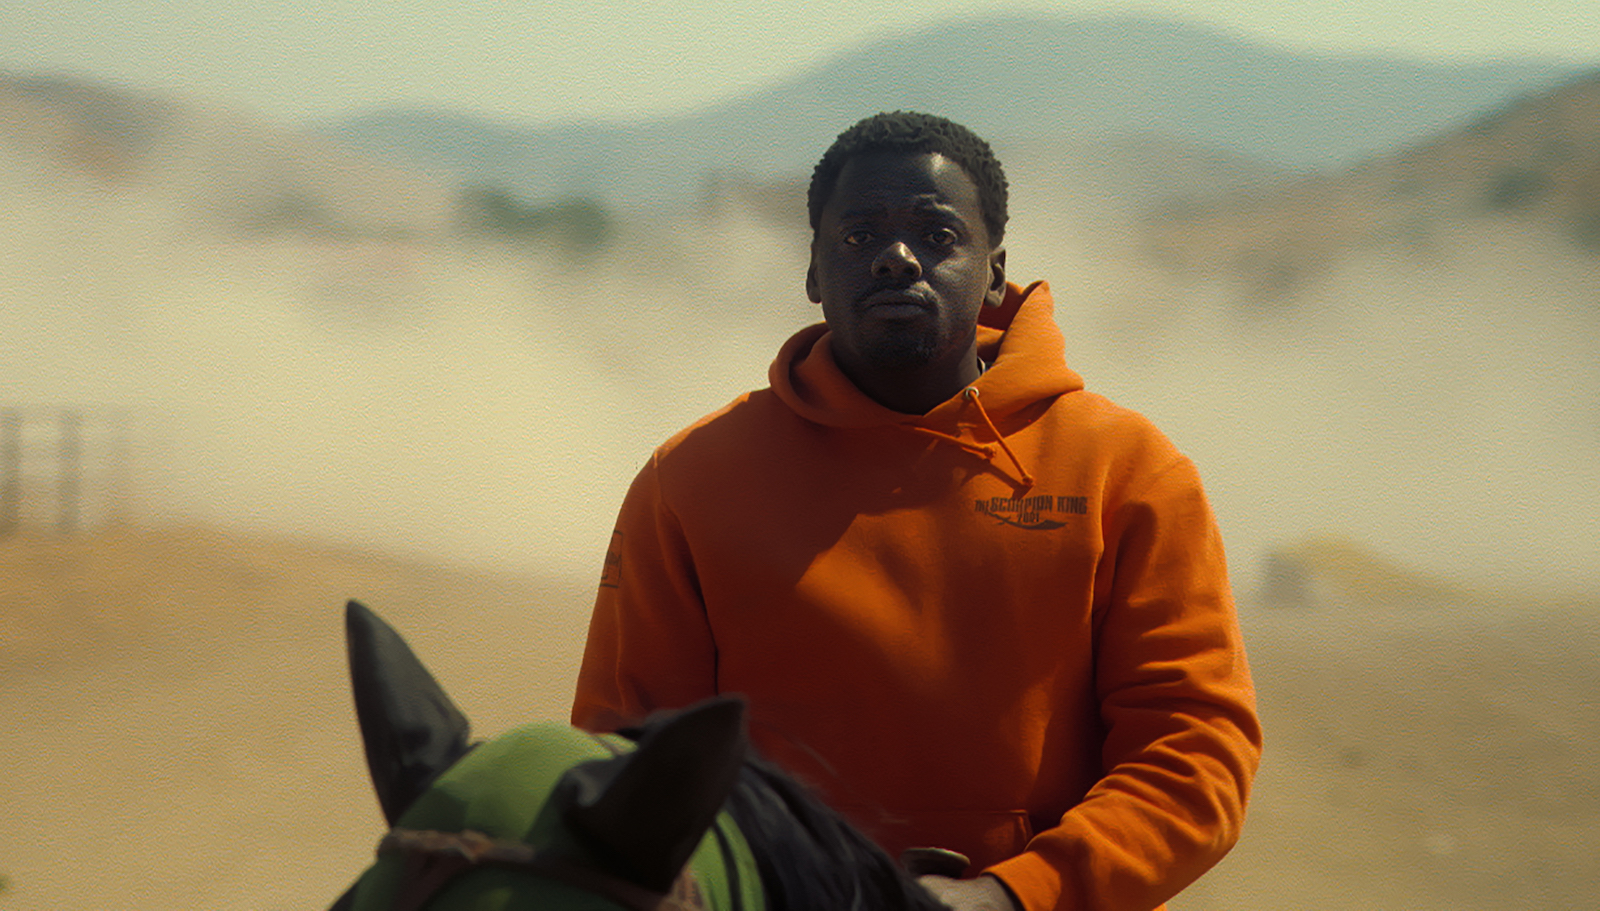 A man in an orange hoodie sweatshirt on a horse in a desert